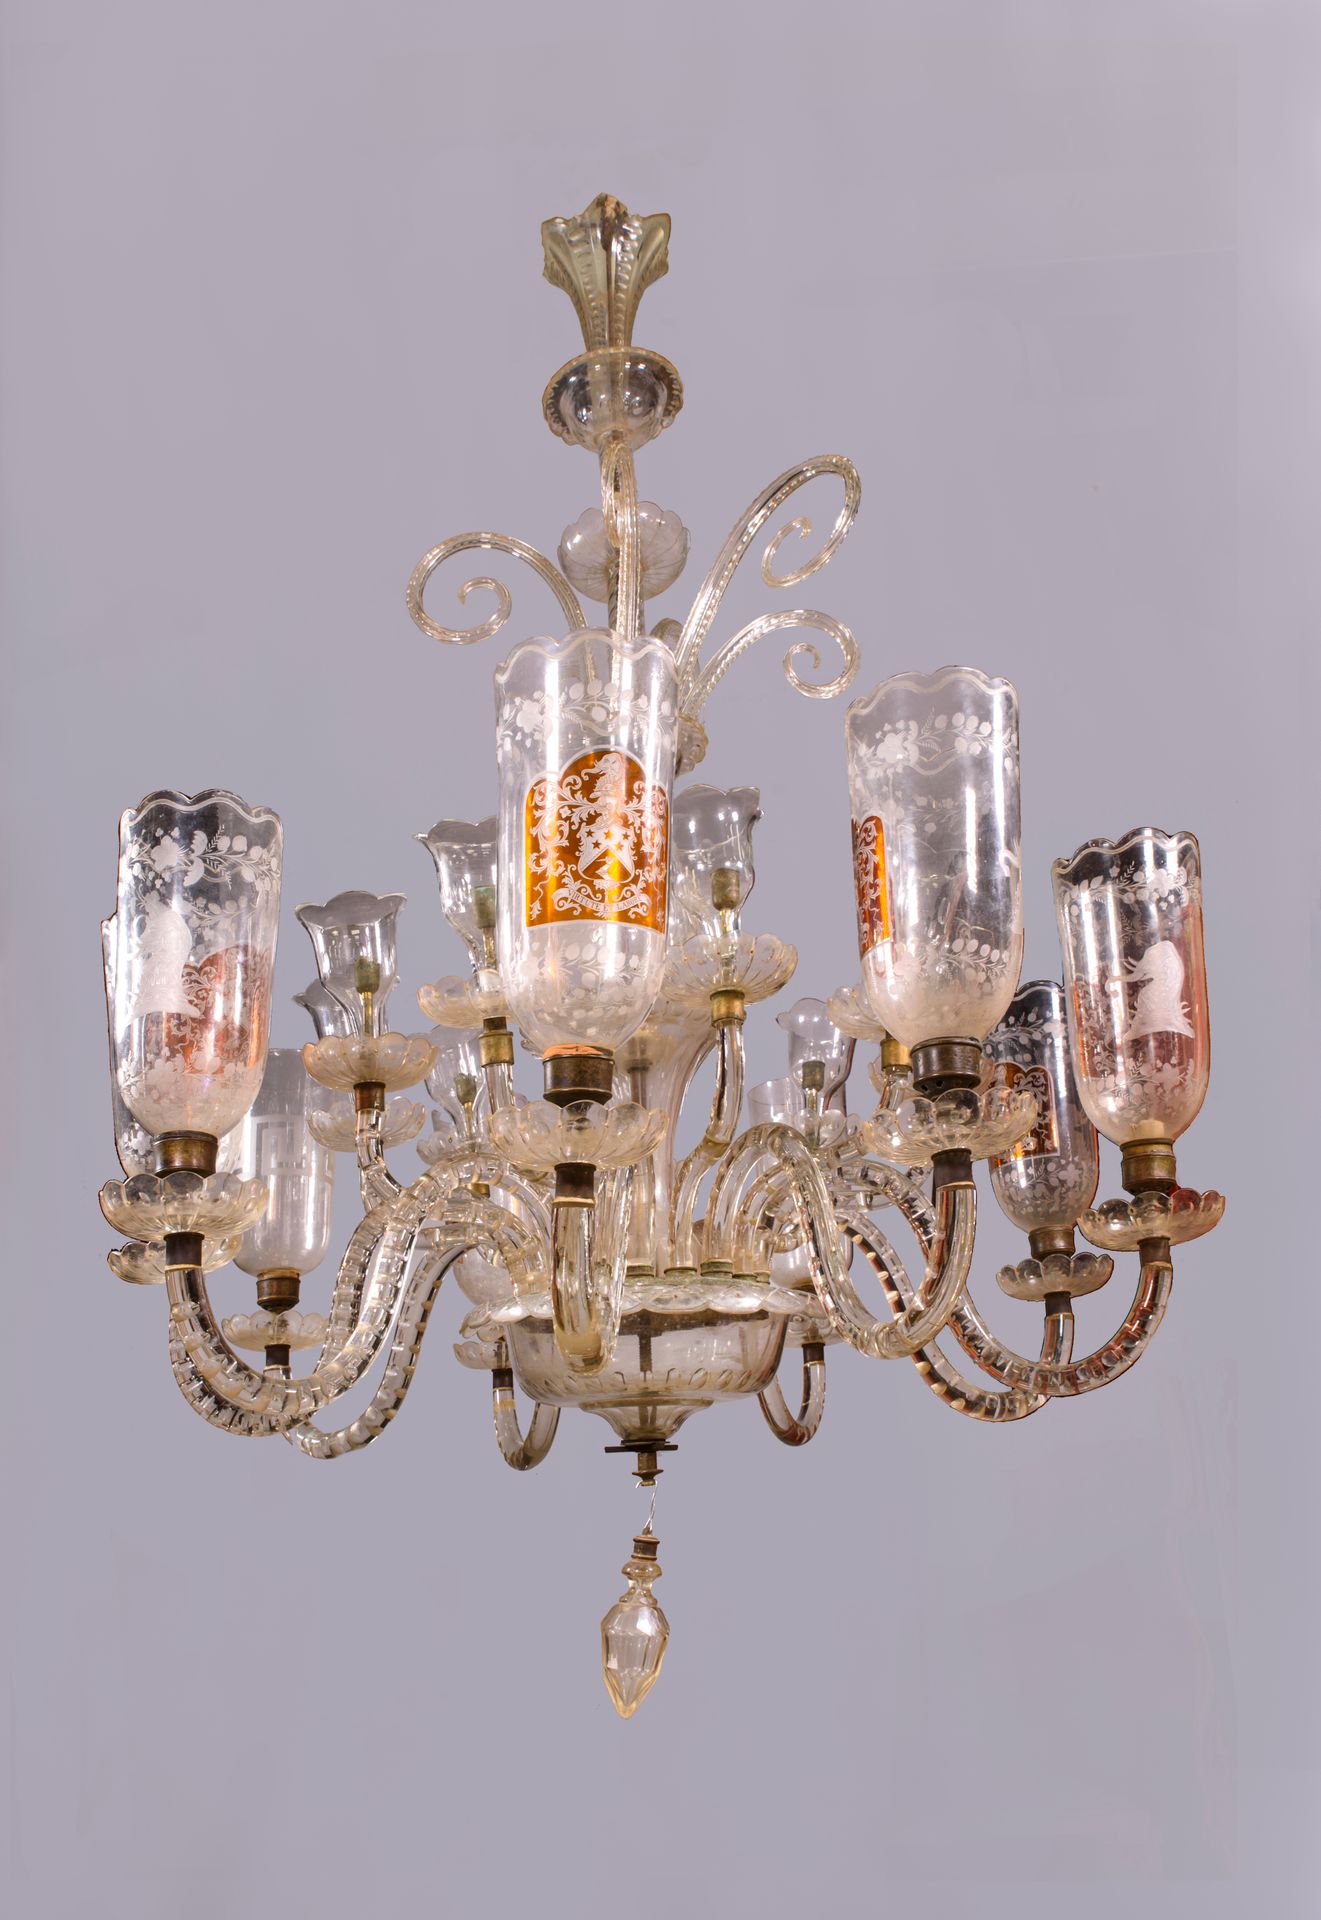 Null 英国，19世纪下半叶，奥斯勒家族的作品

大型切割和雕刻的水晶吊灯，两层同心的十八个扇形灯。 大碗上装饰着酒色的纹章

潘皮